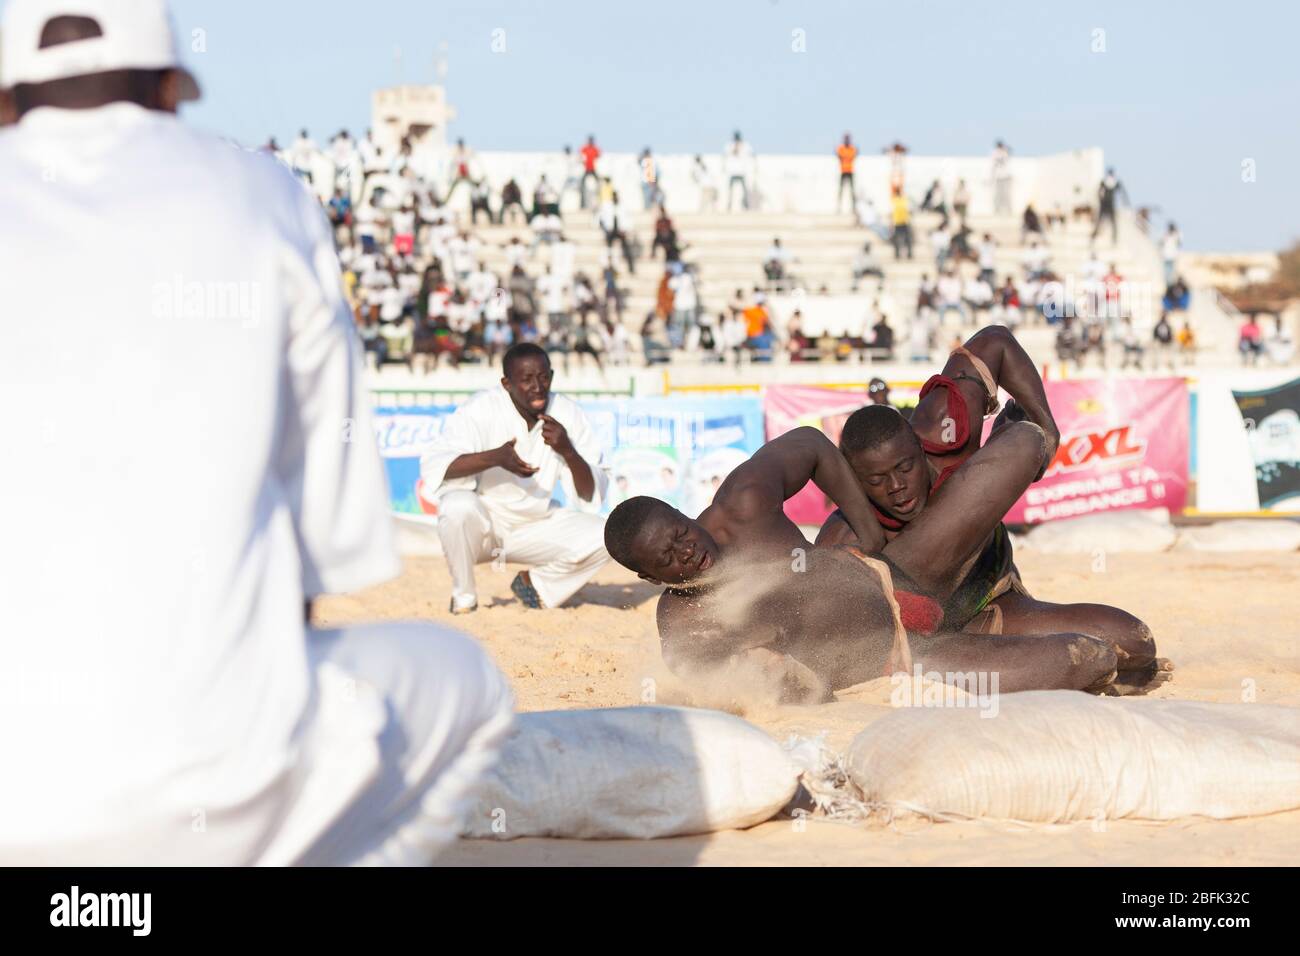 Wrestlers go to ground during a wrestling match in Dakar, Senegal. Stock Photo